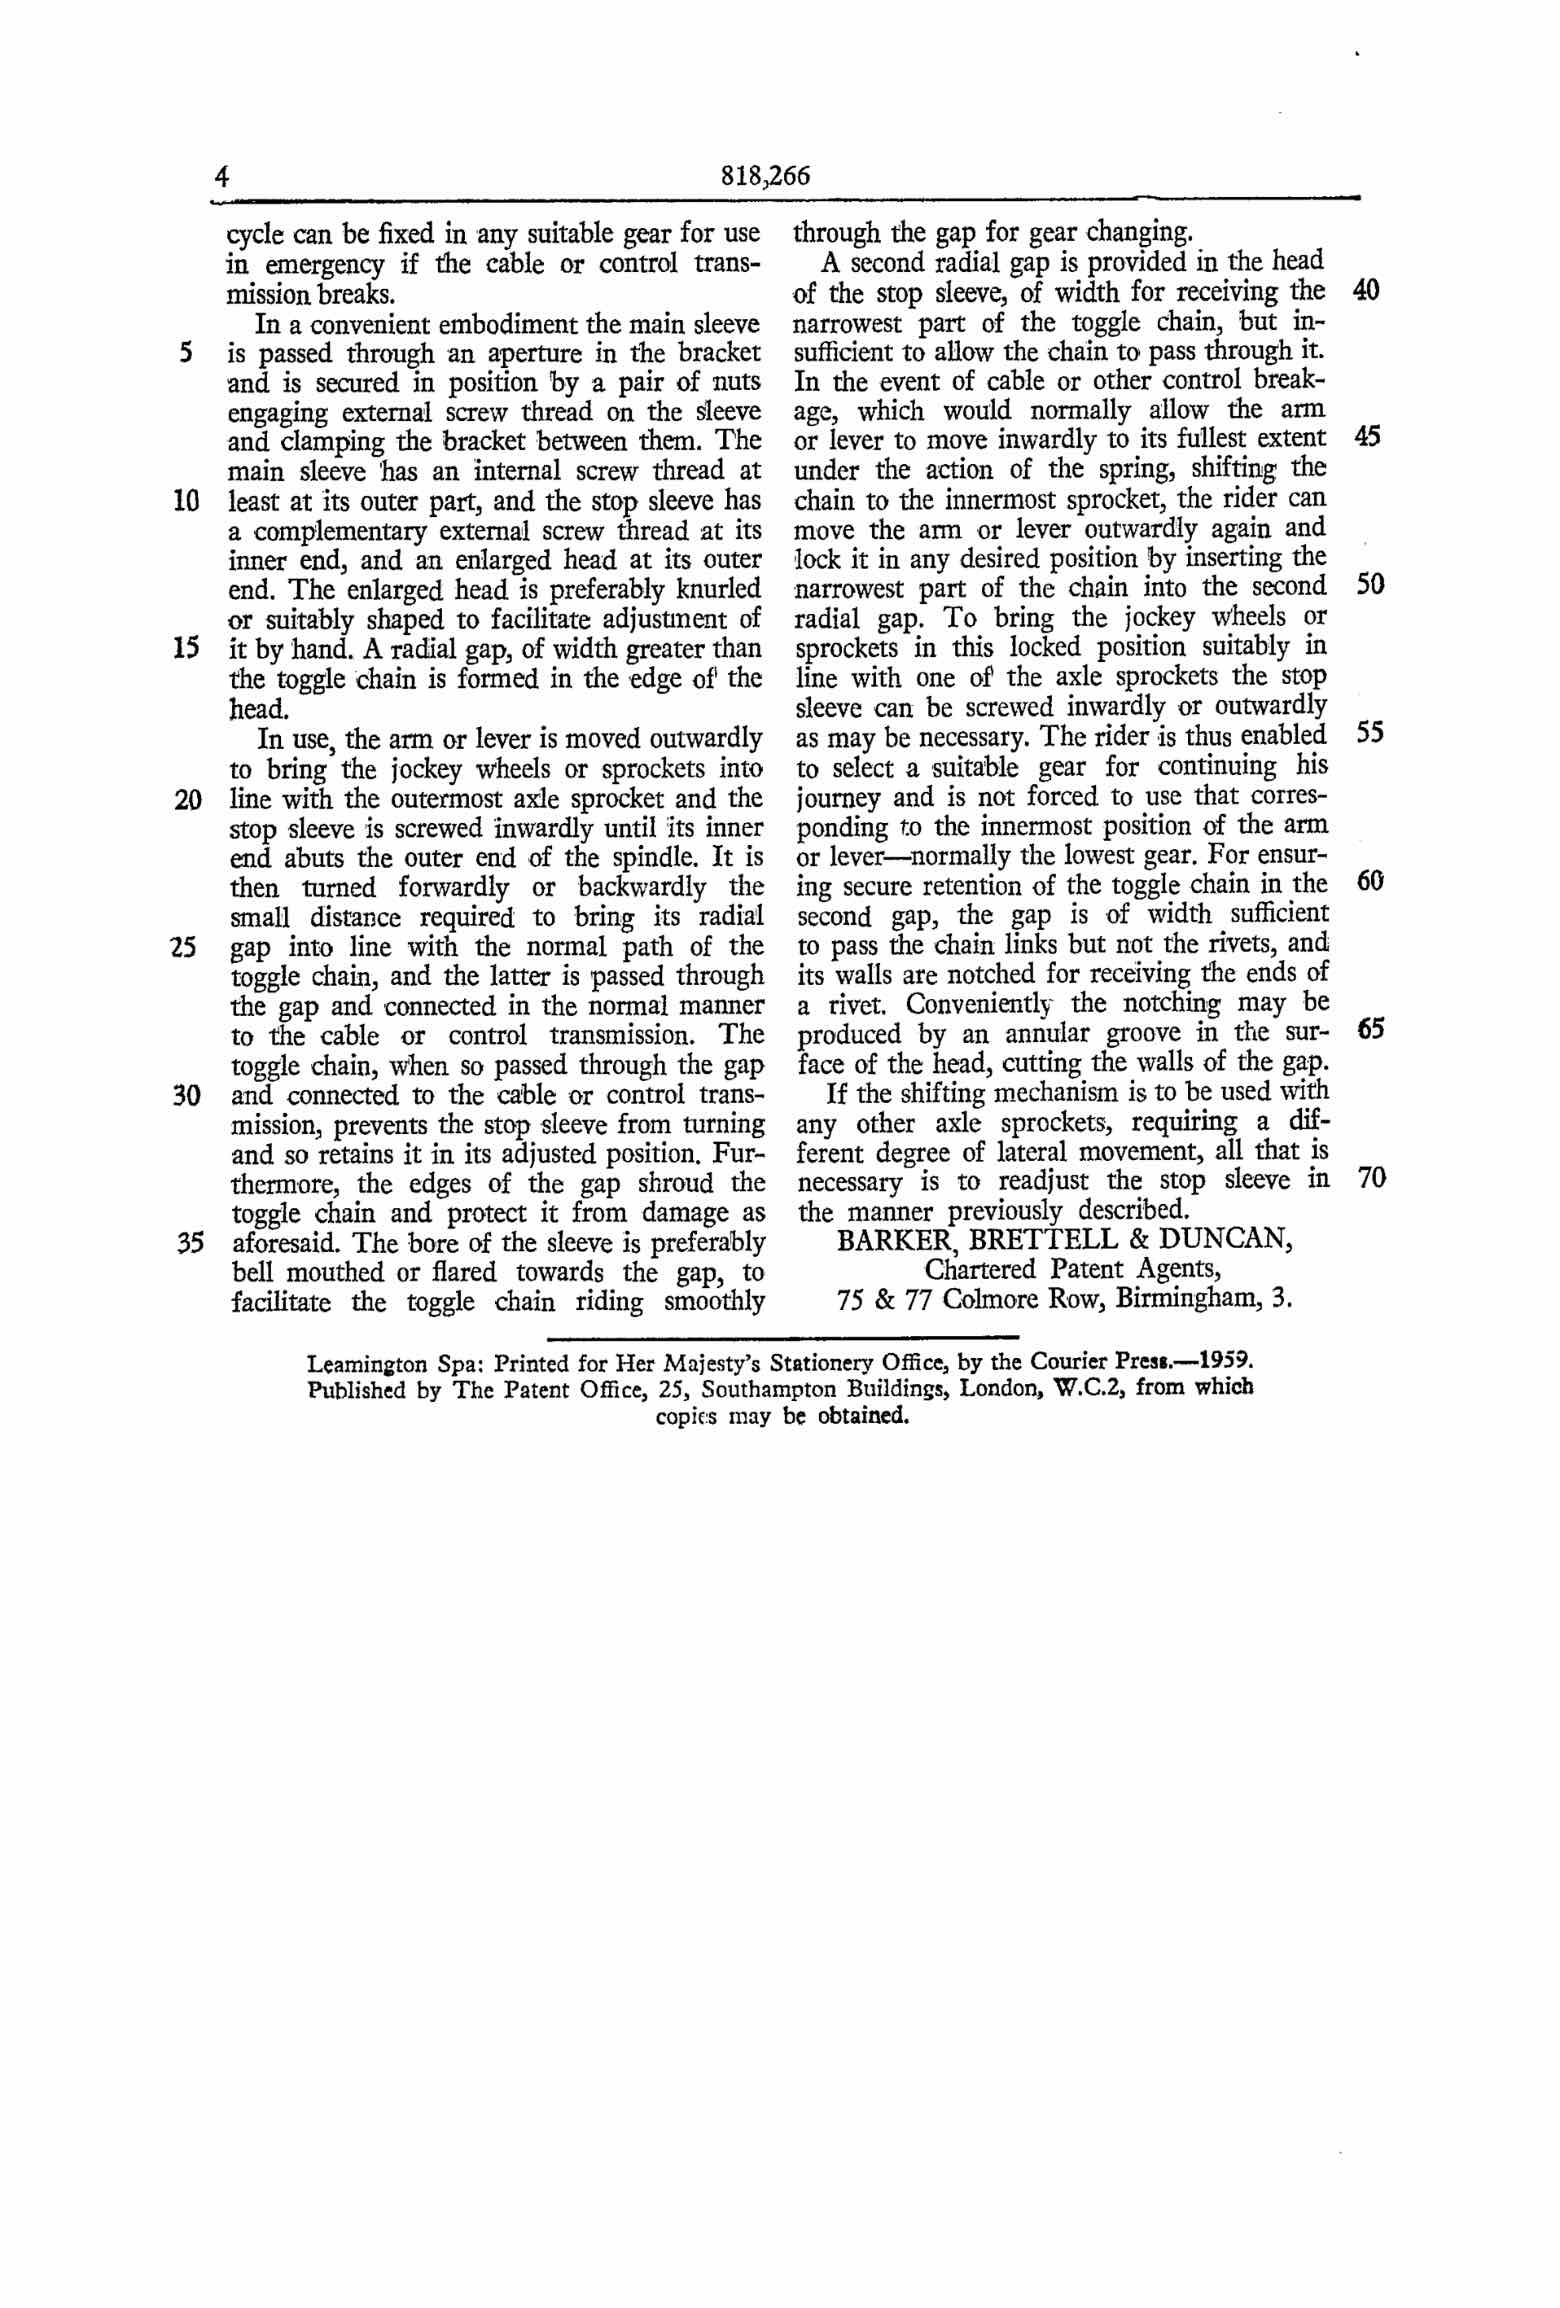 UK Patent 818,266 - Resilion Crimson Star scan 4 main image